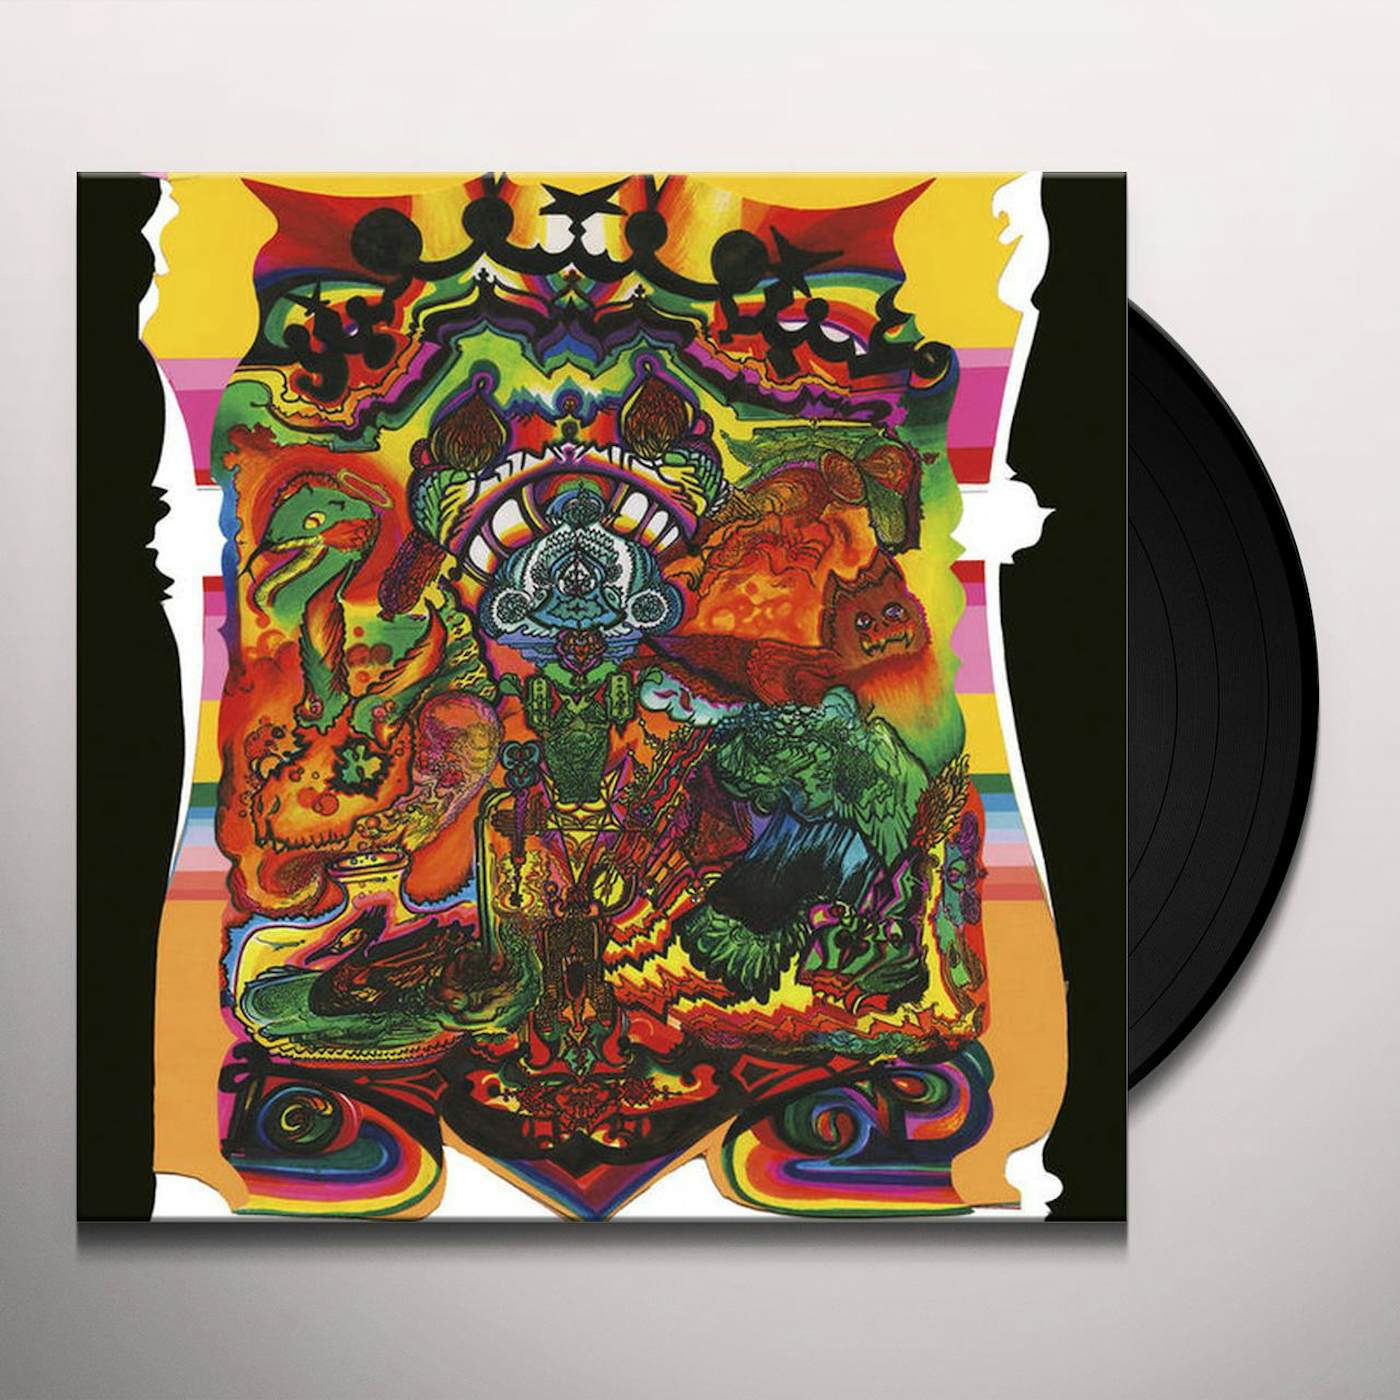 Cave Psychic Psummer Vinyl Record